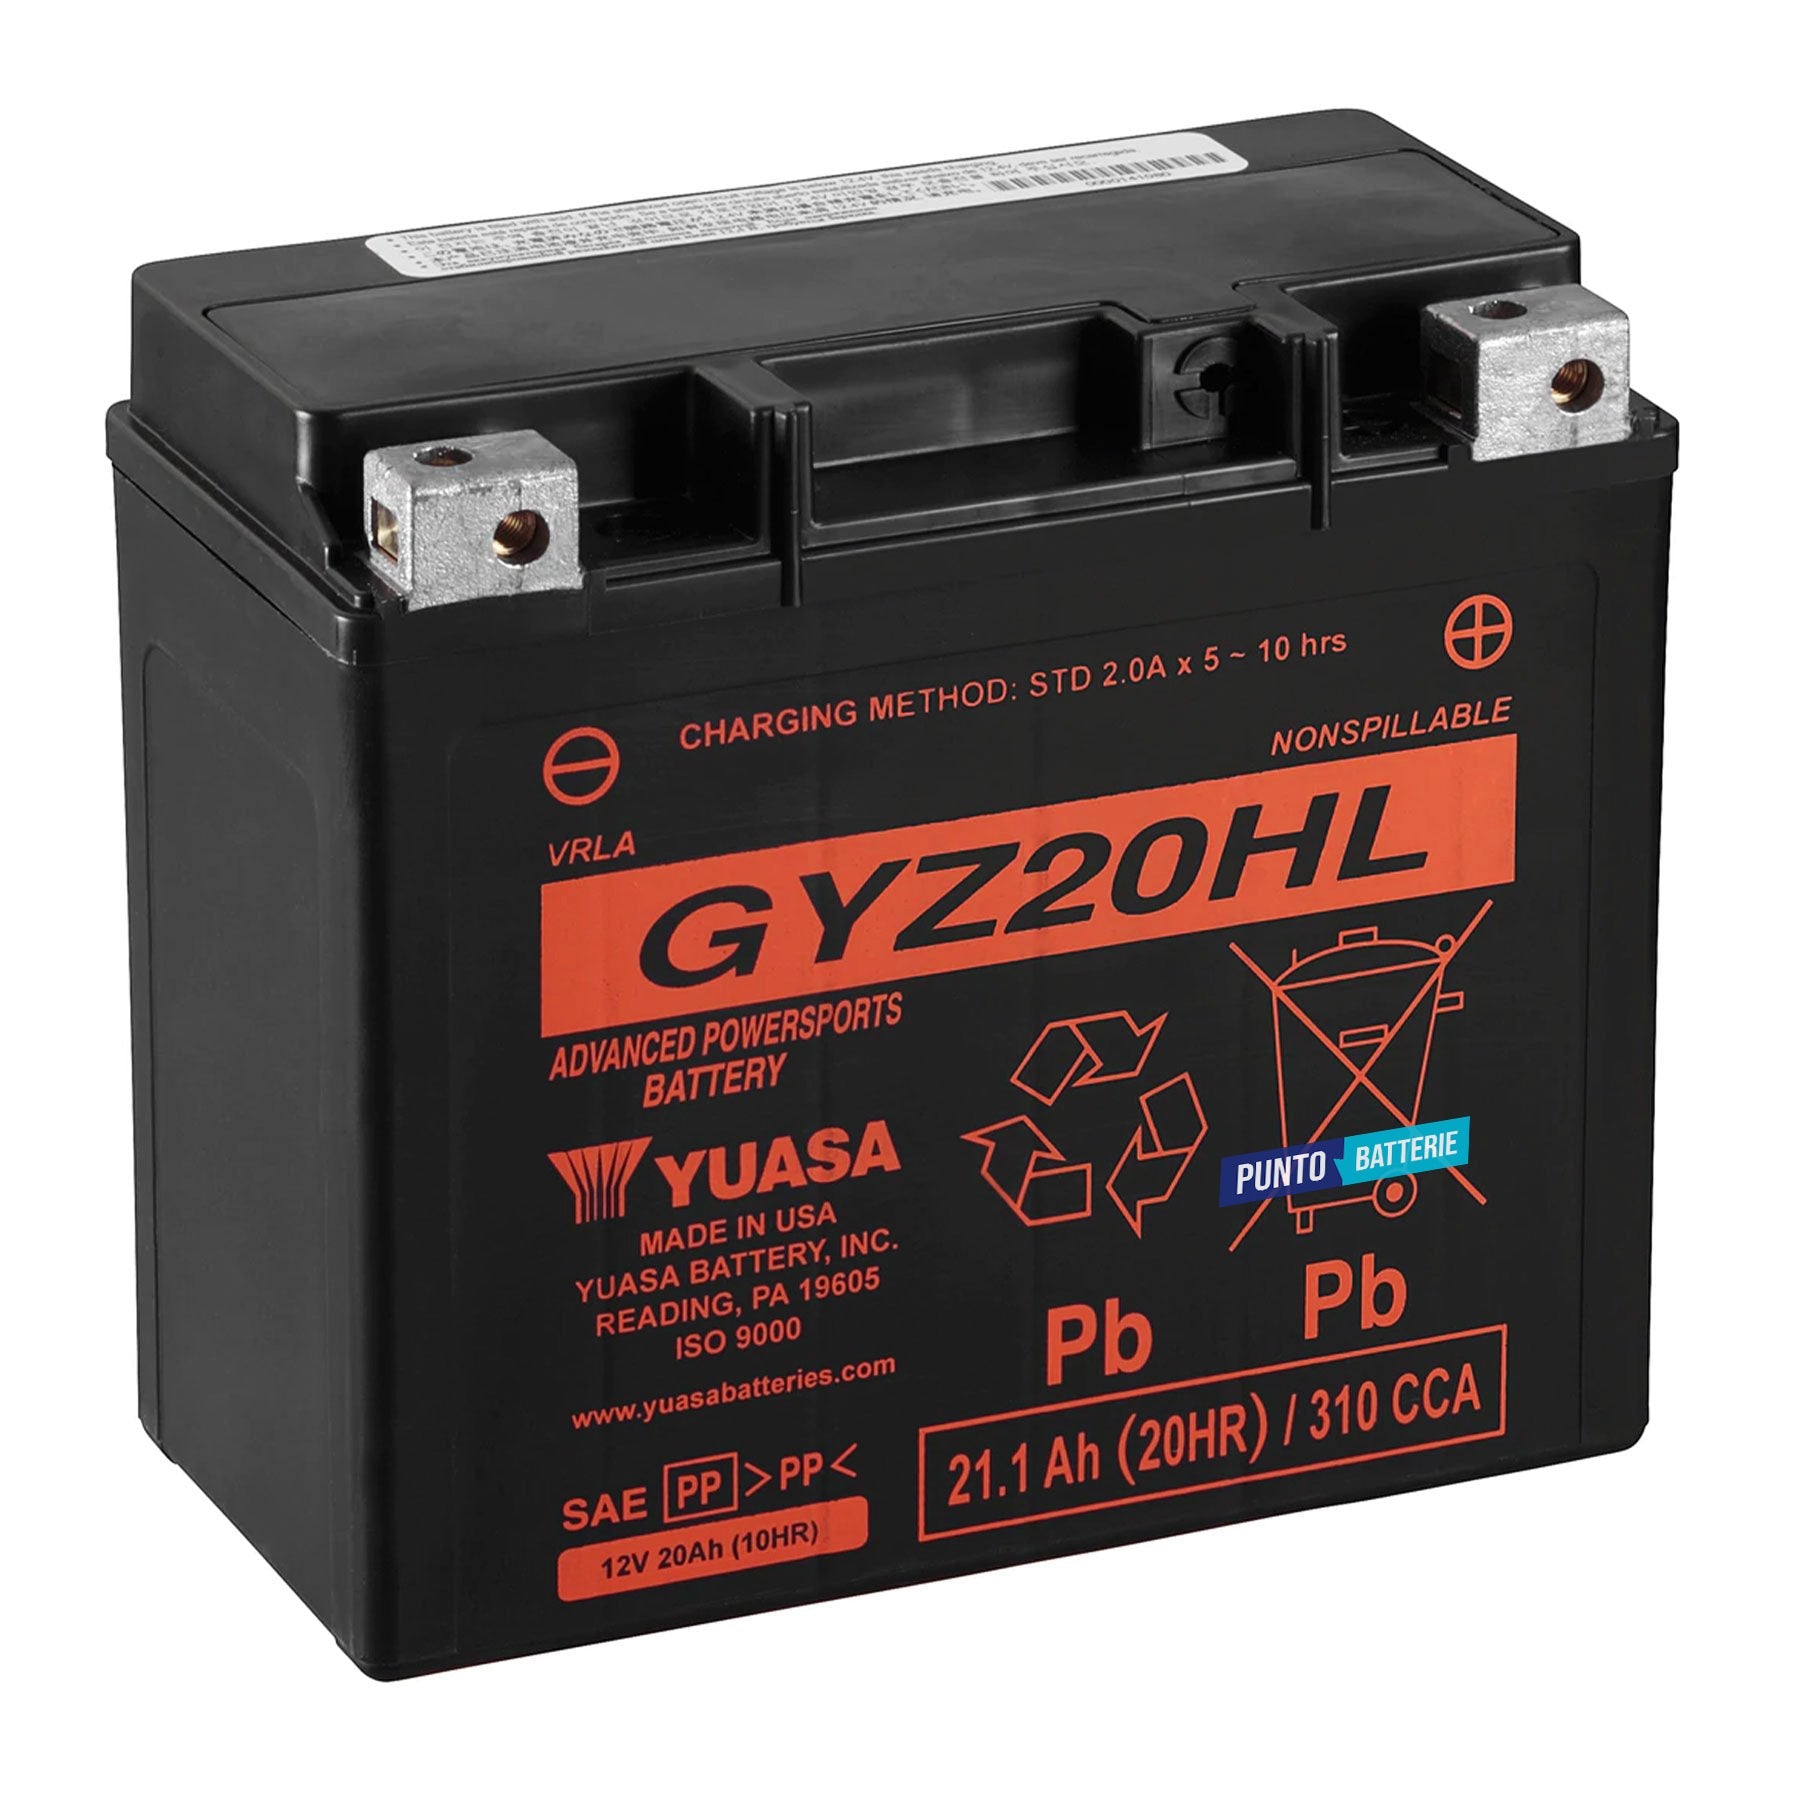 Batteria originale Yuasa GYZ GYZ20HL, dimensioni 175 x 87 x 155, polo positivo a destra, 12 volt, 20 amperora, 320 ampere. Batteria per moto, scooter e powersport.